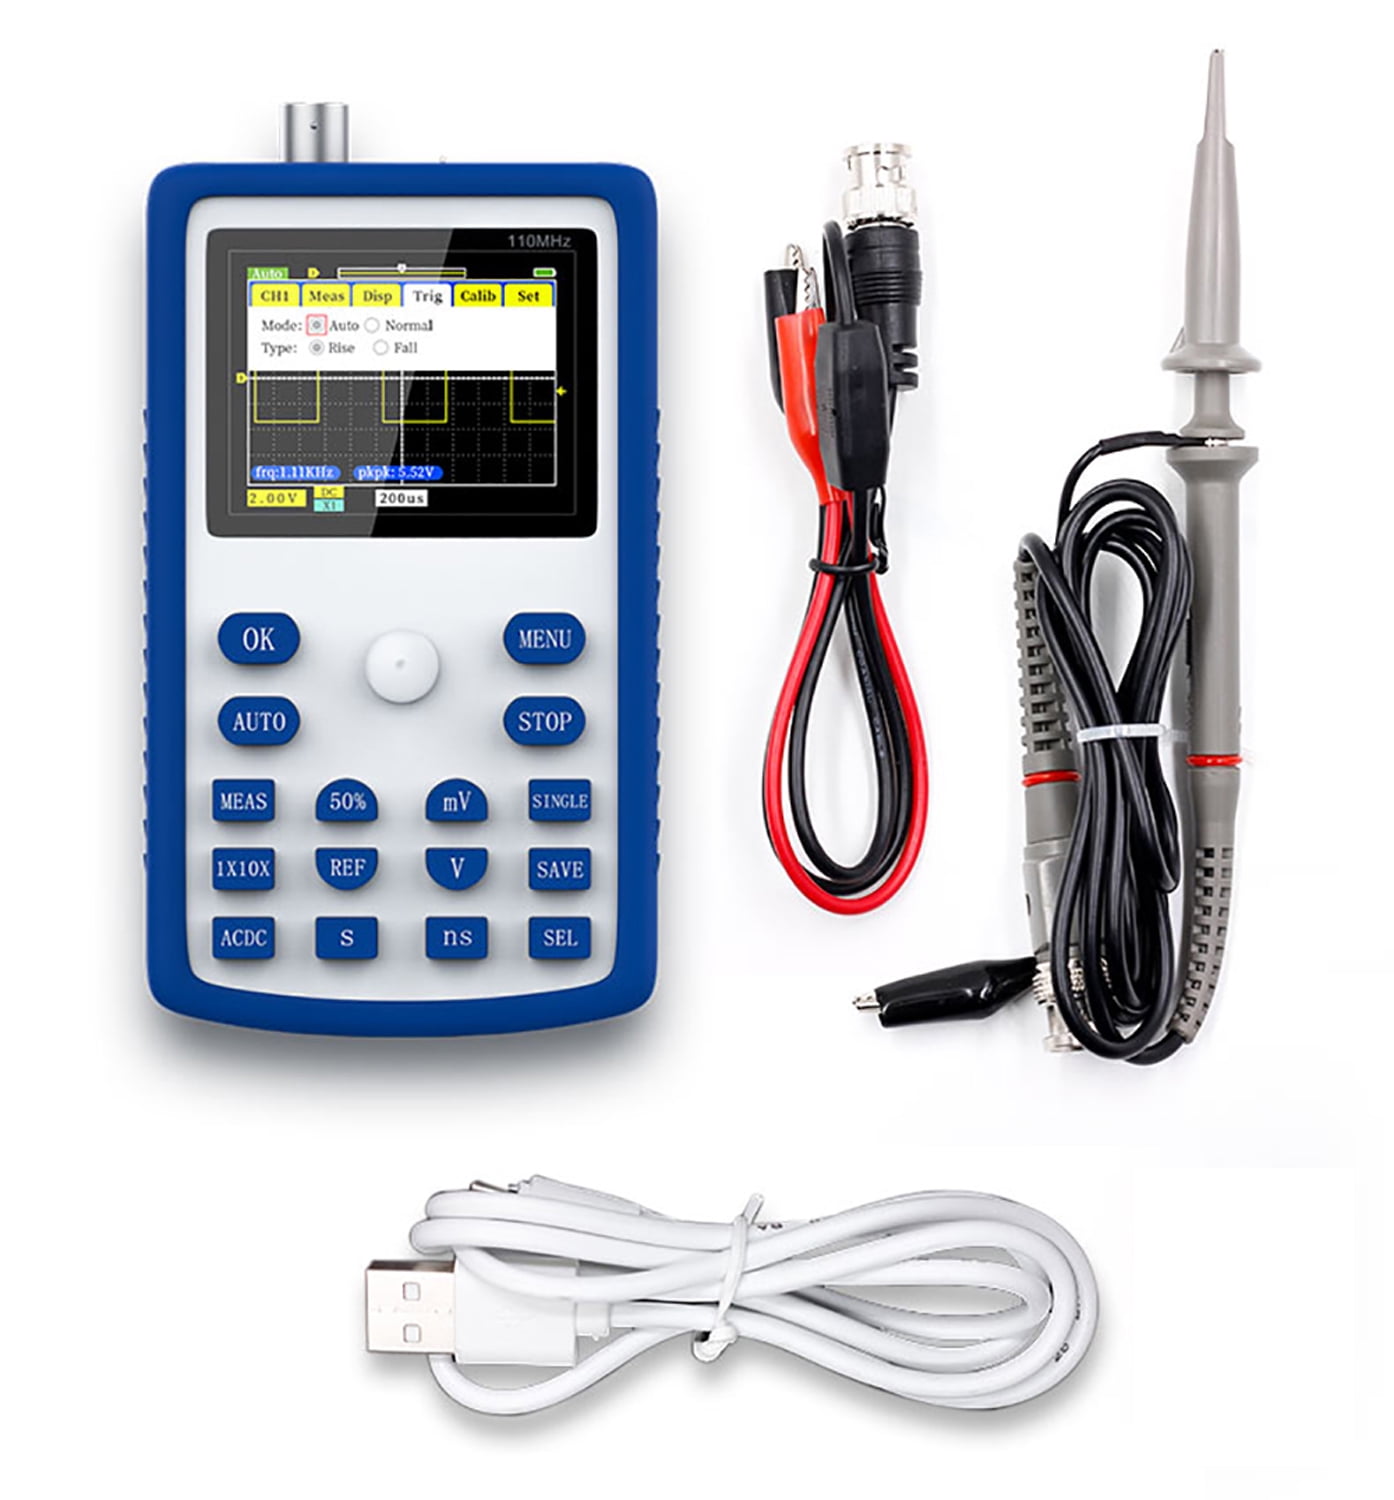 For oscilloscope handheld small mini oscilloscope 100MHz bandwidth 500MS 